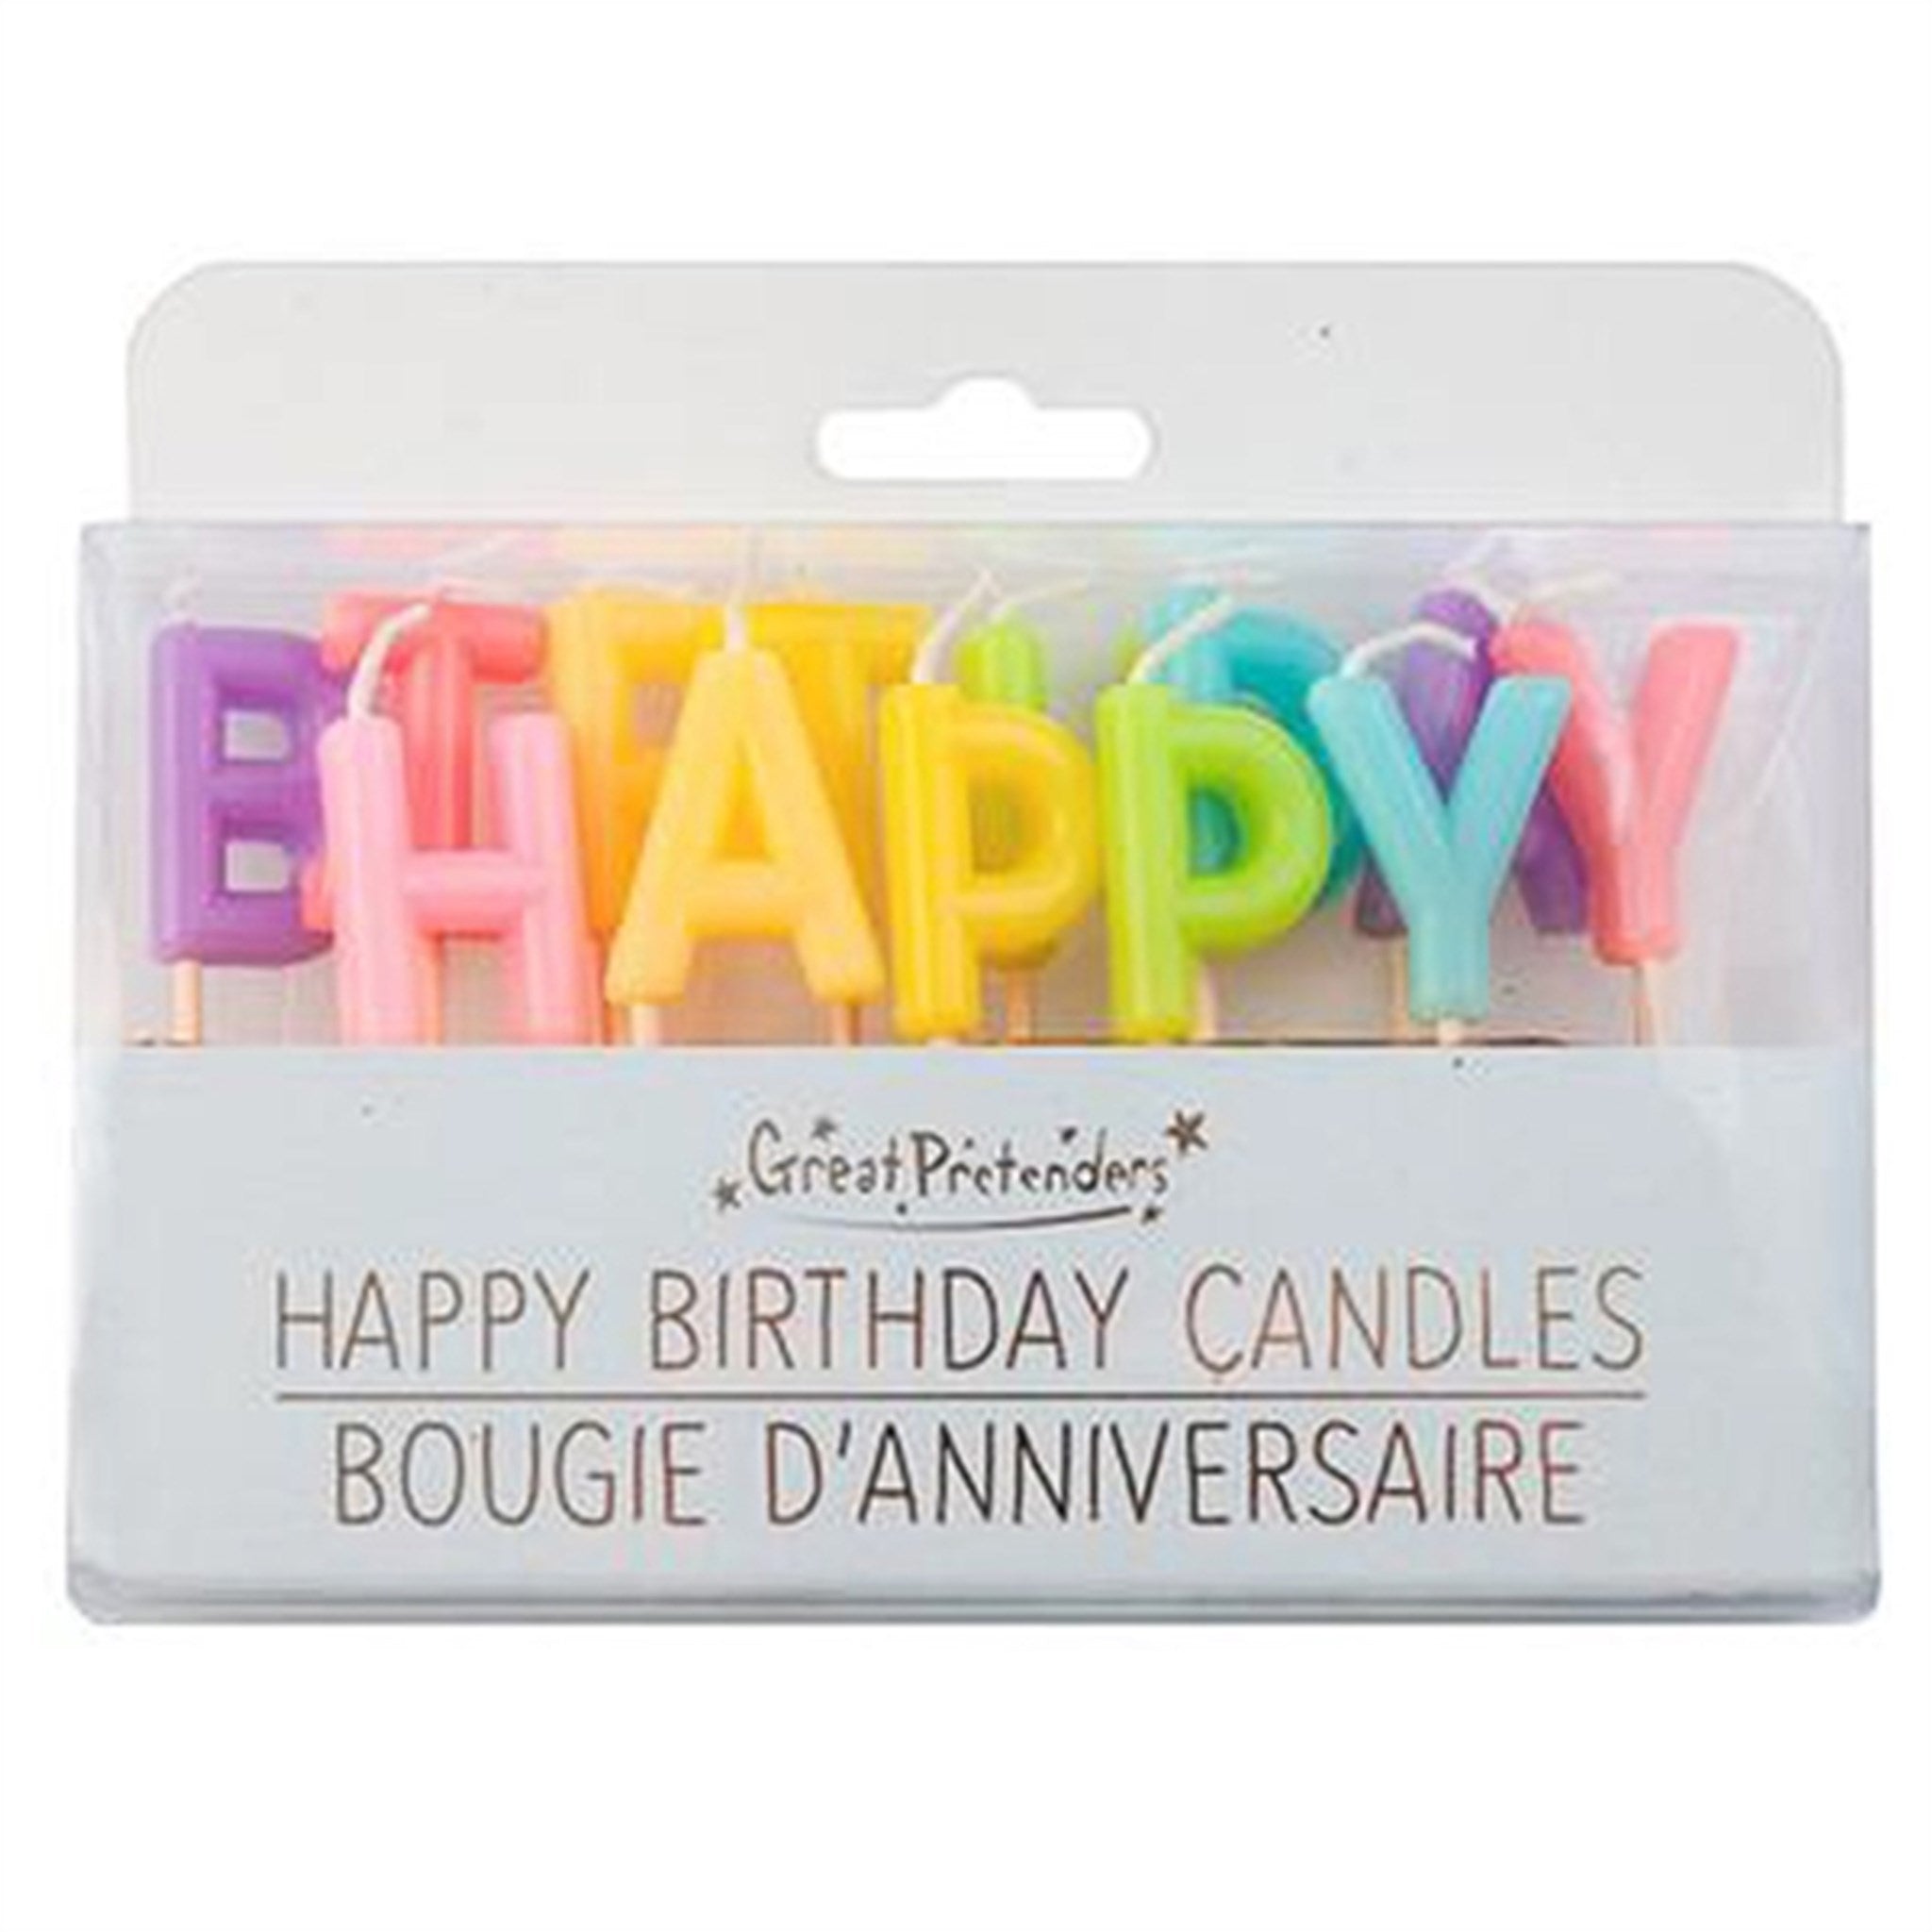 Great Pretenders Happy Birthday Candles